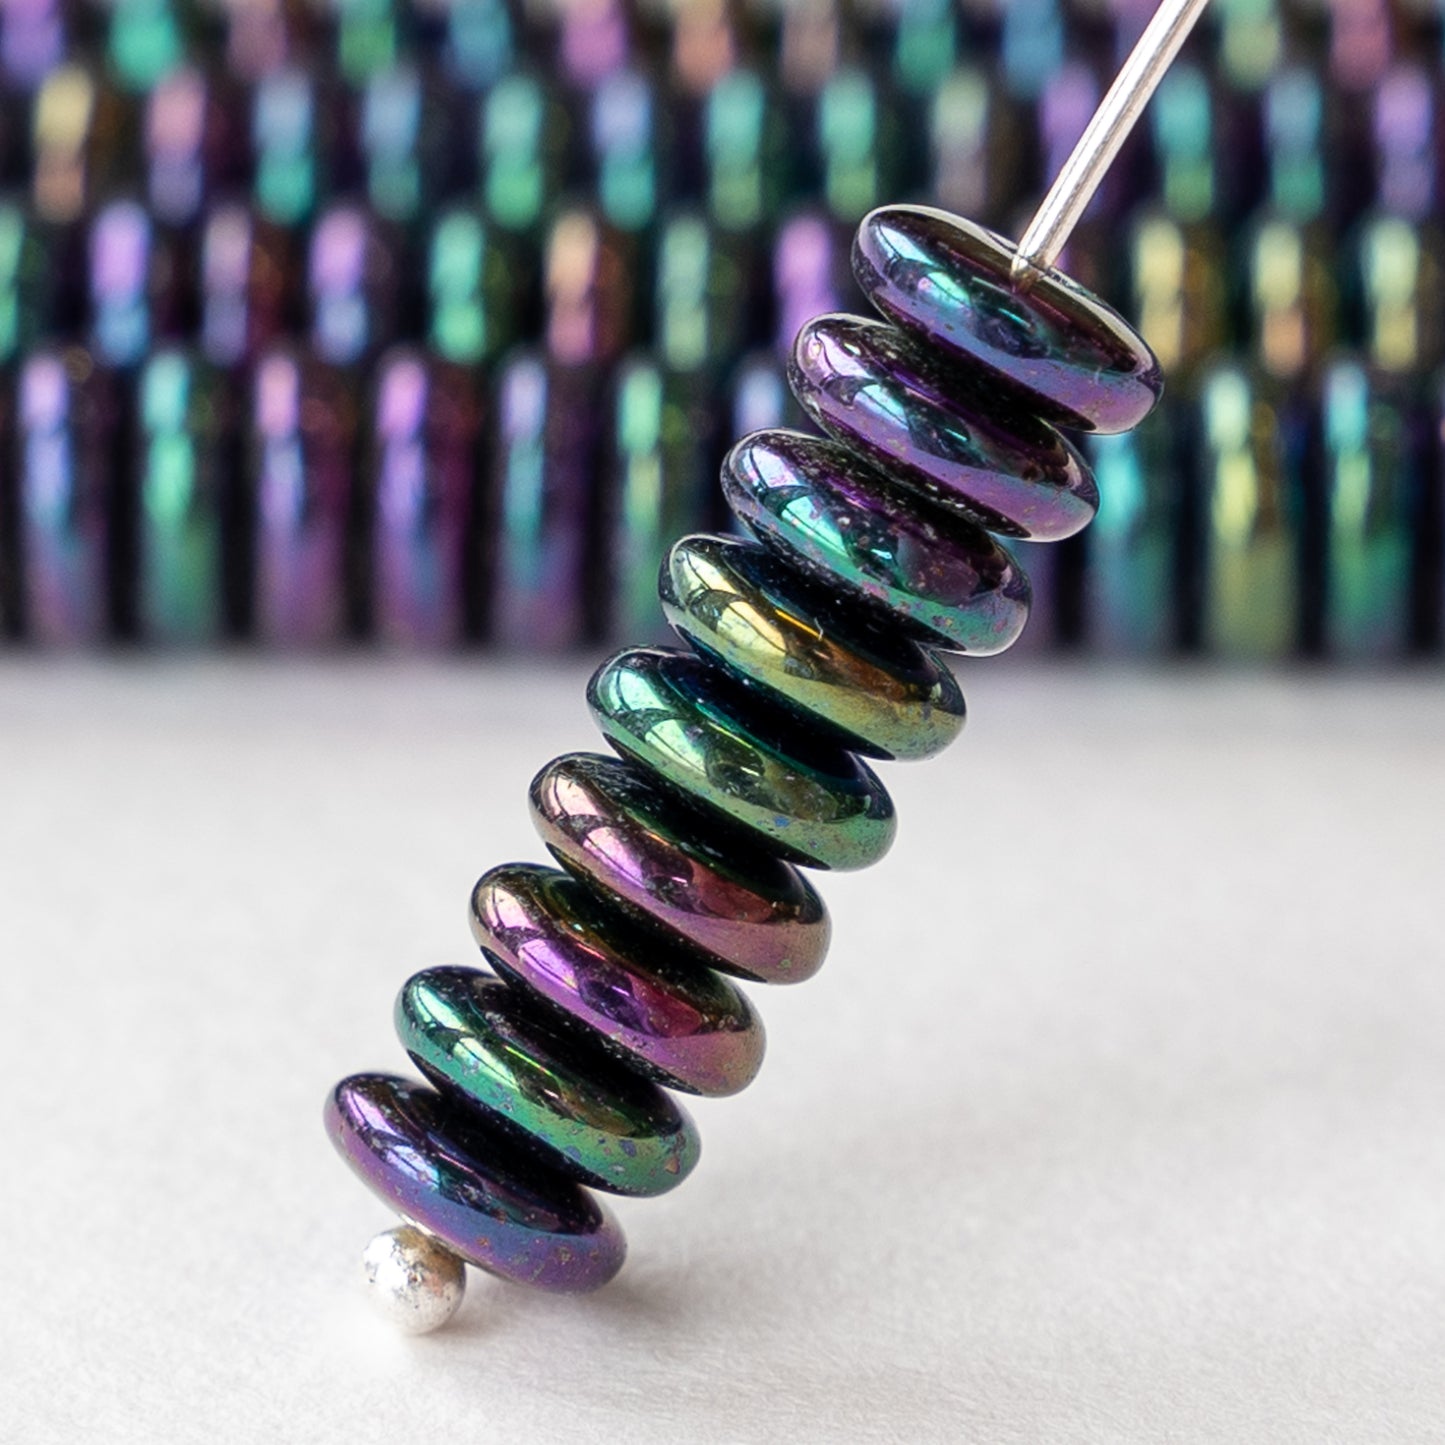 6mm Rondelle Beads - Metallic Blue Iris - 100 Beads